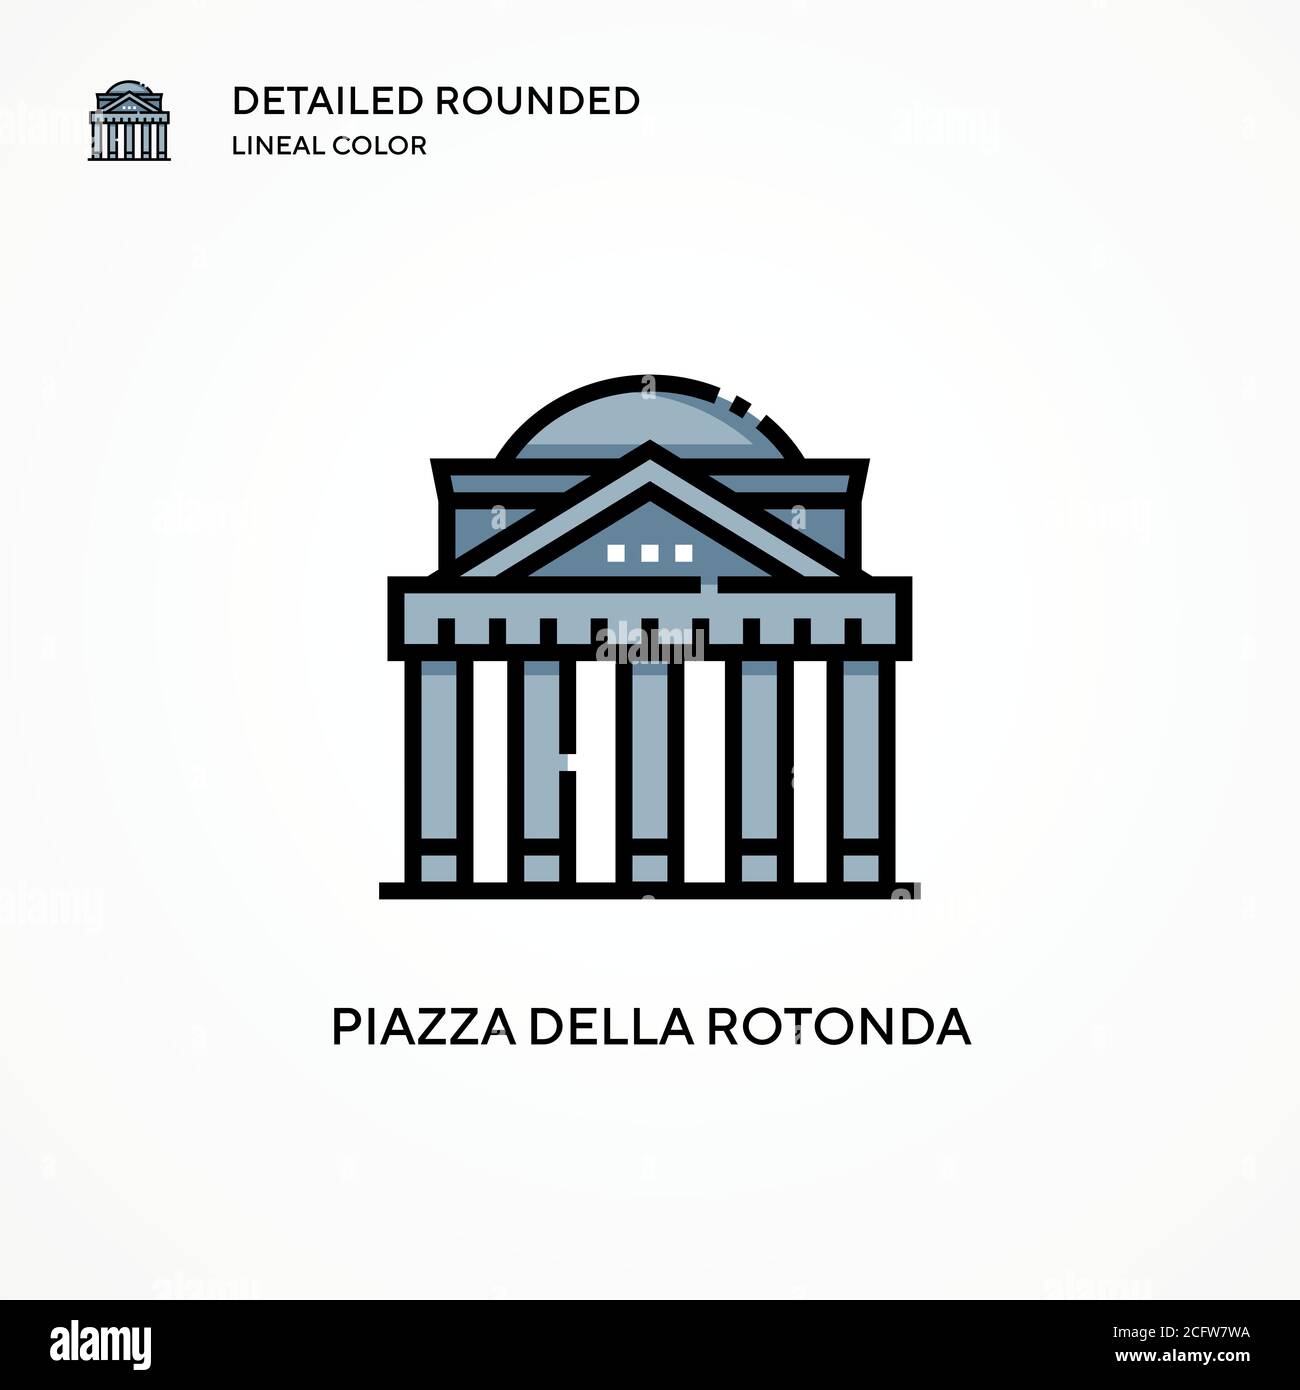 Piazza della rotonda vector icon. Modern vector illustration concepts. Easy to edit and customize. Stock Vector